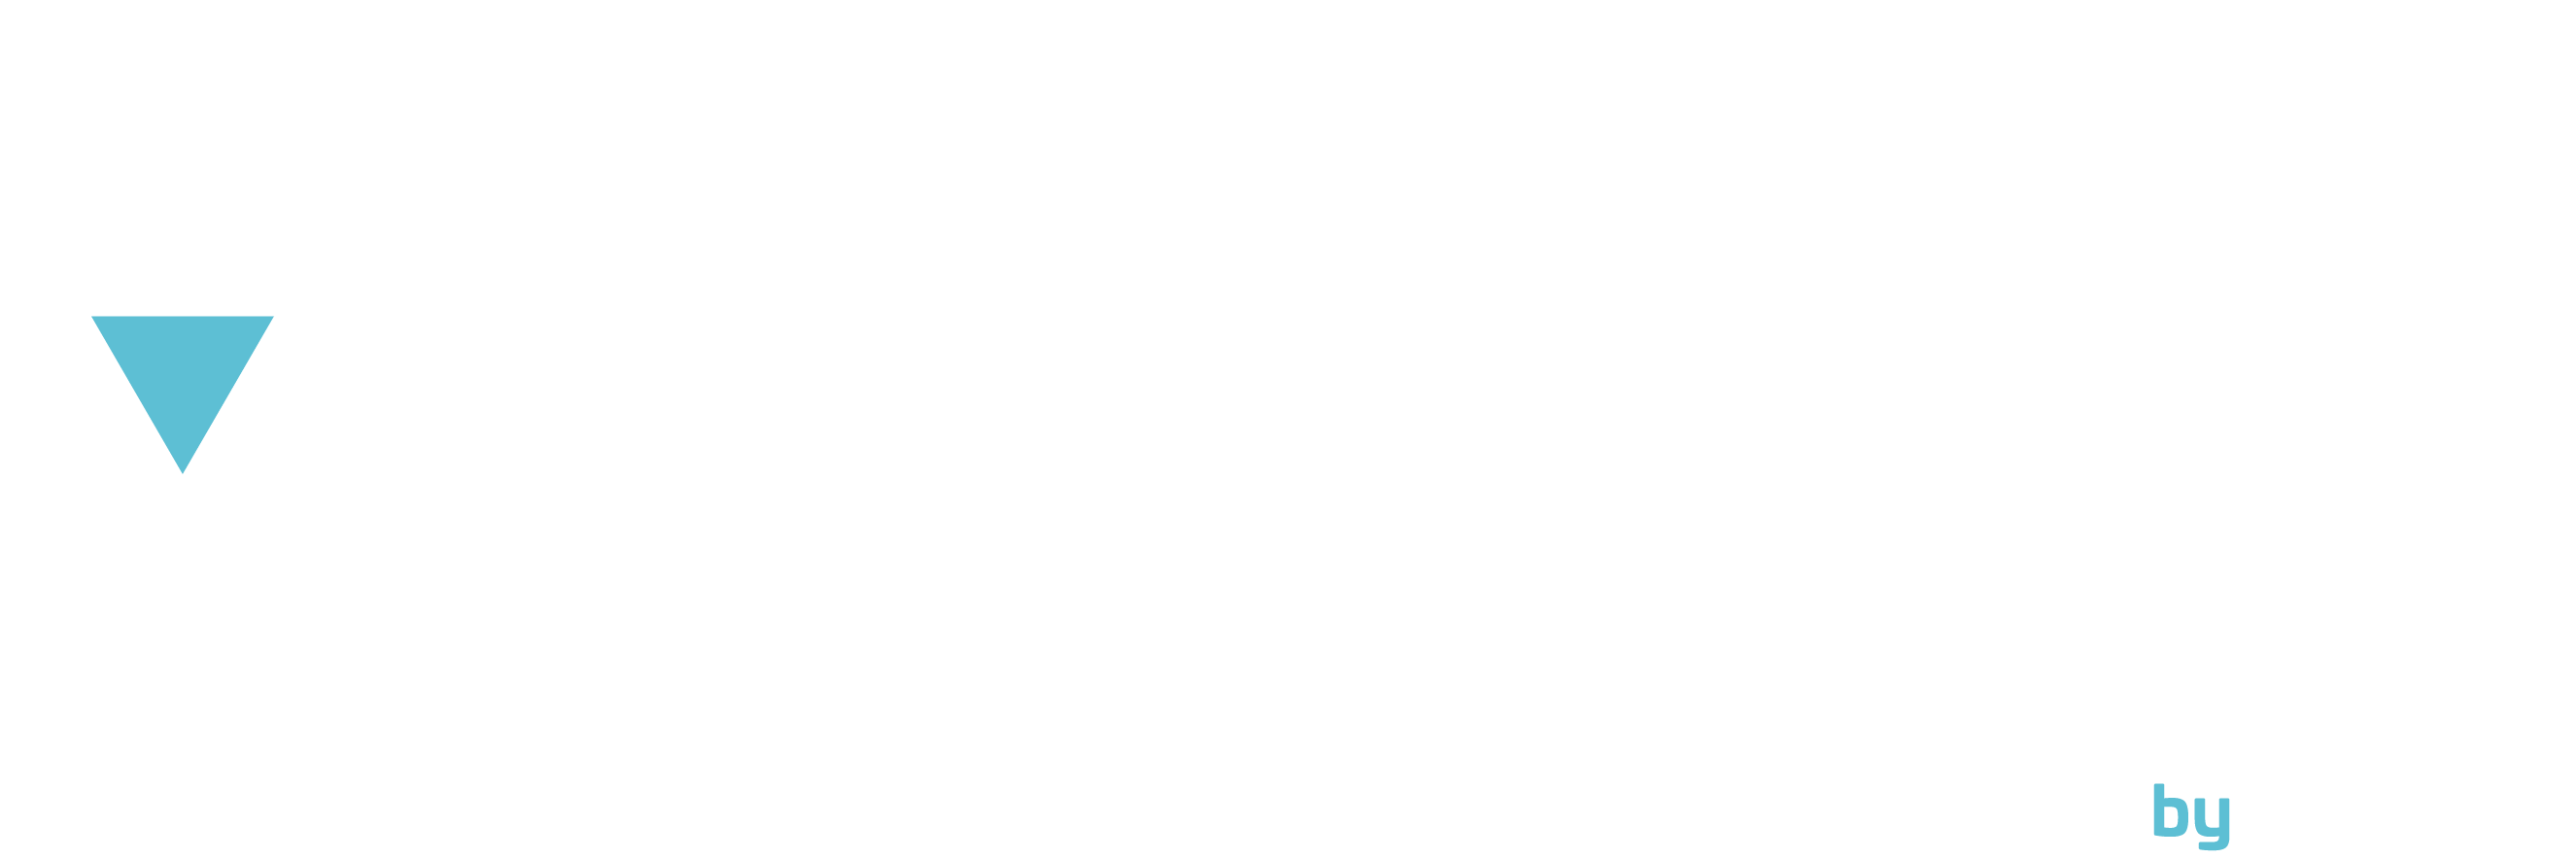 NEW logo ERCOM BLANC